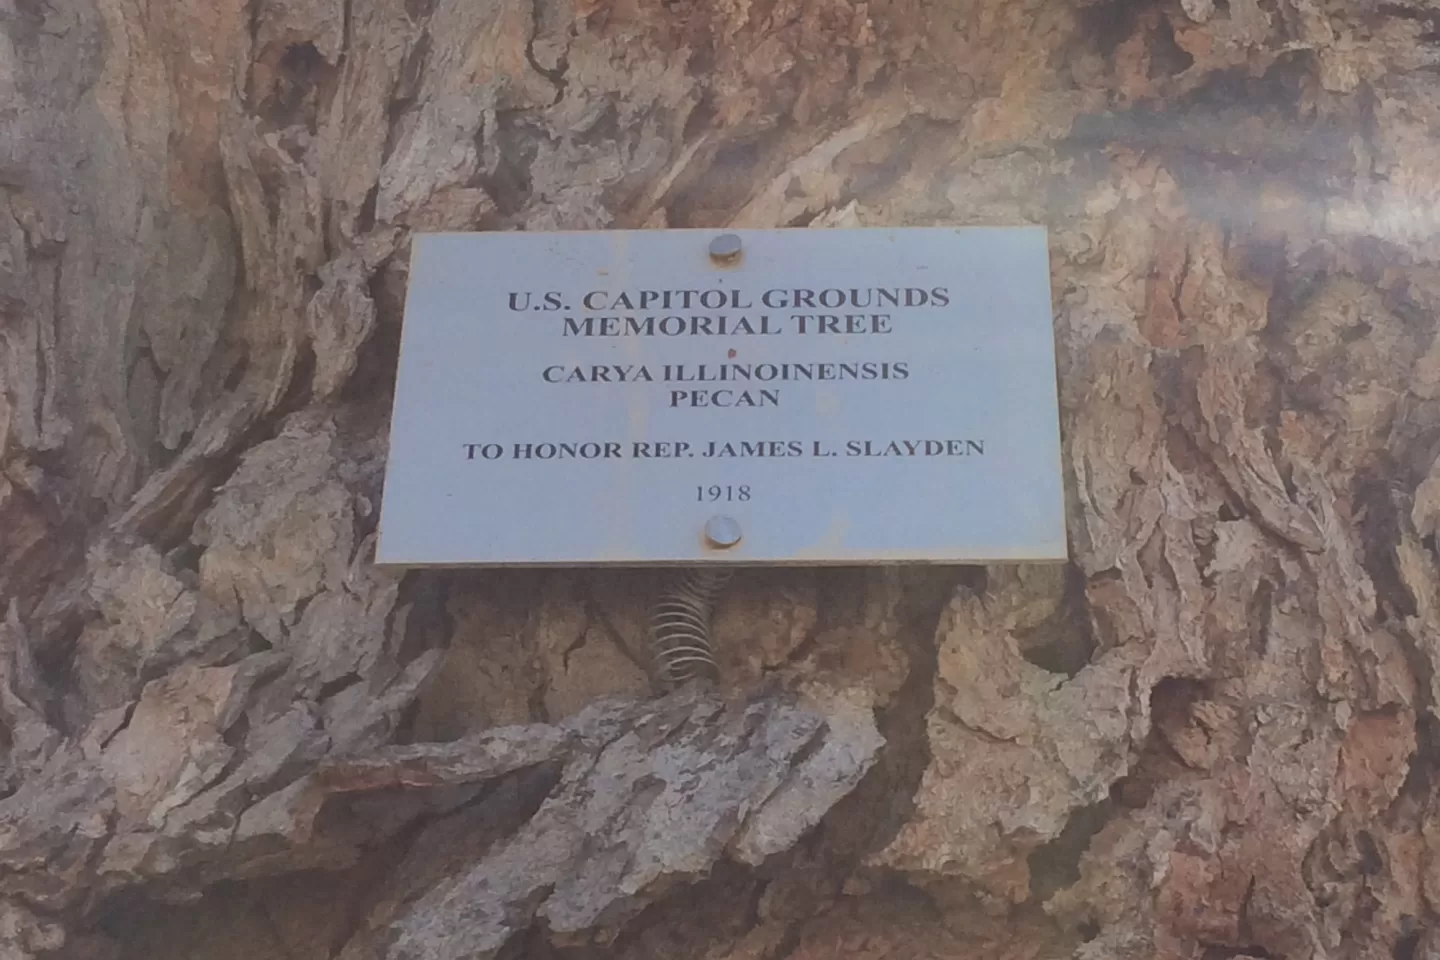 Plaque that reads: U.S. Capitol Grounds Memorial Tree  Carya illoinensis (Pecan)  To Honor Rep. James L. Slayden  1918